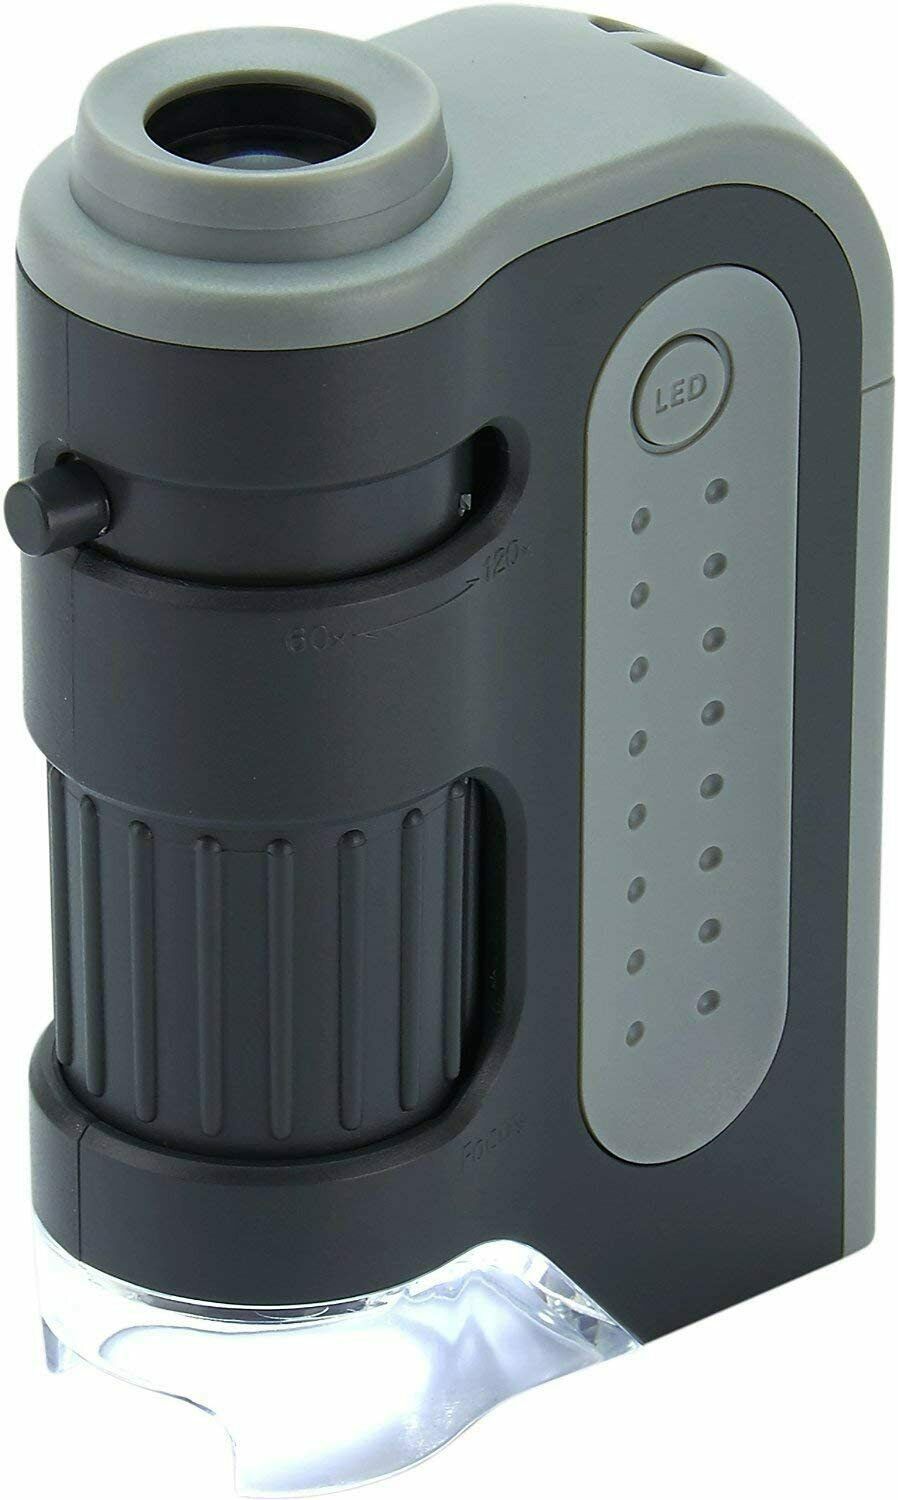 Carson Microbrite Plus Led Lighted Pocket Microscope 60x - 120x